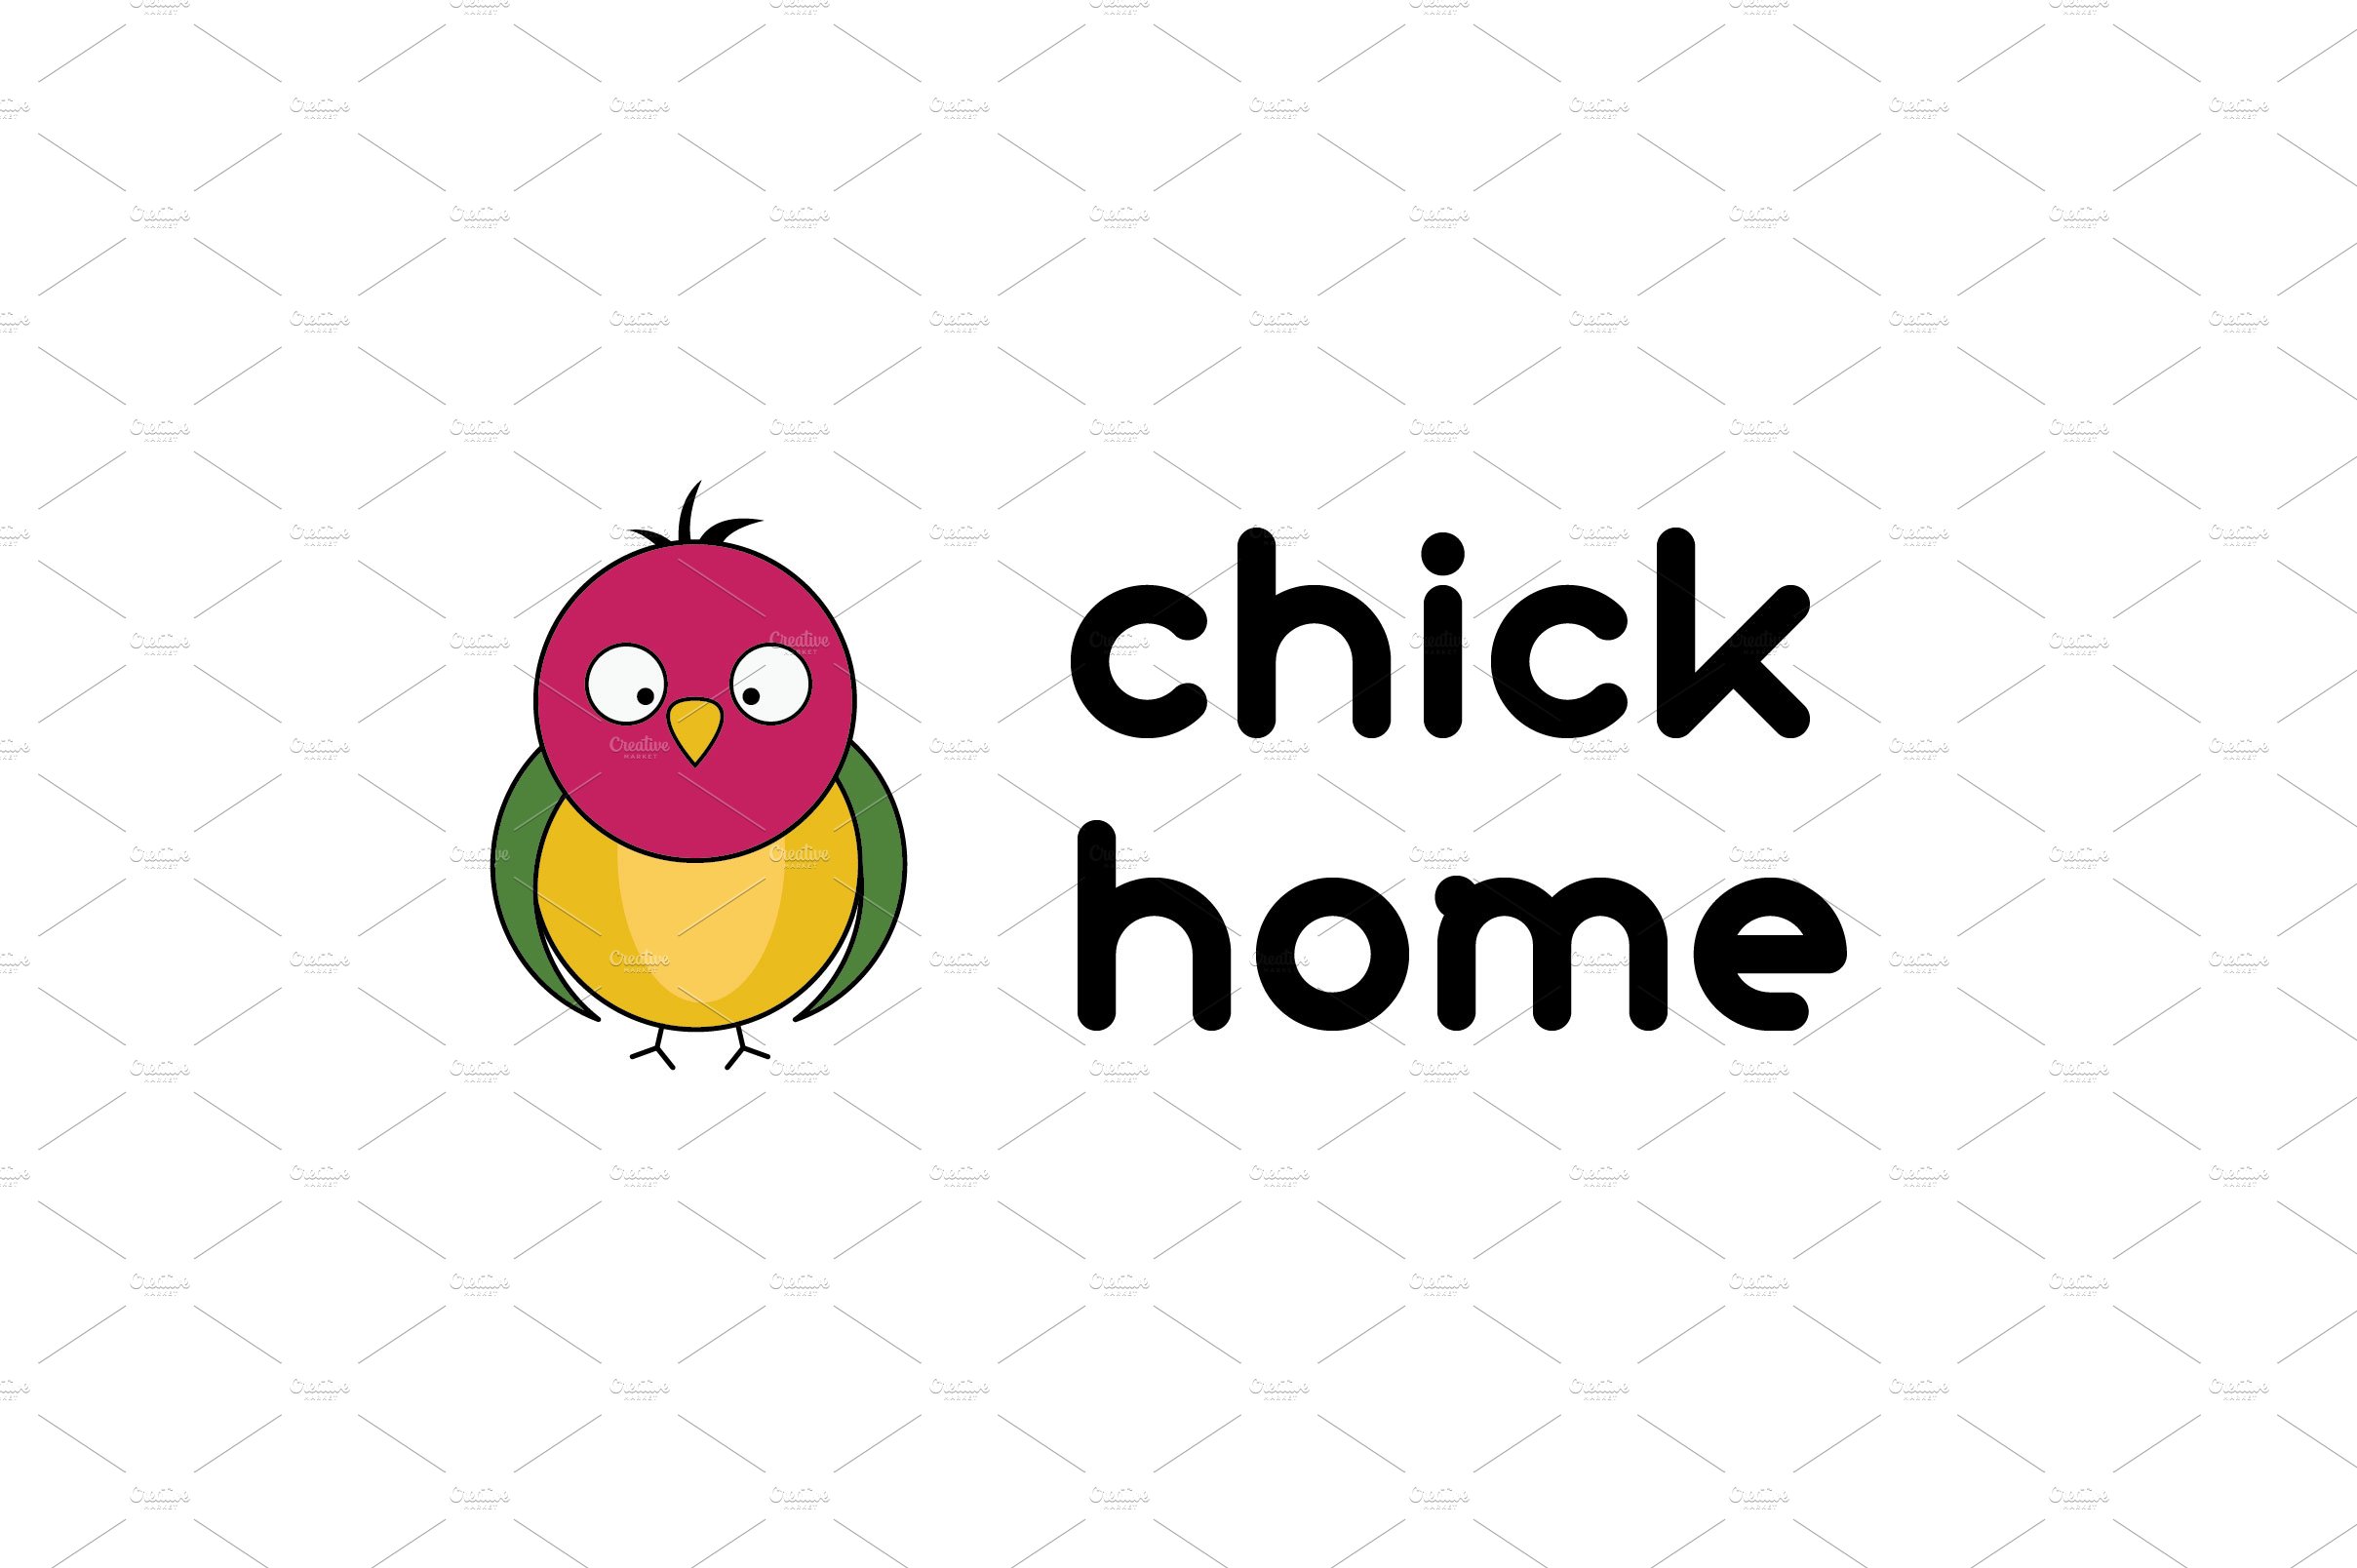 Logo Chickhome preview image.